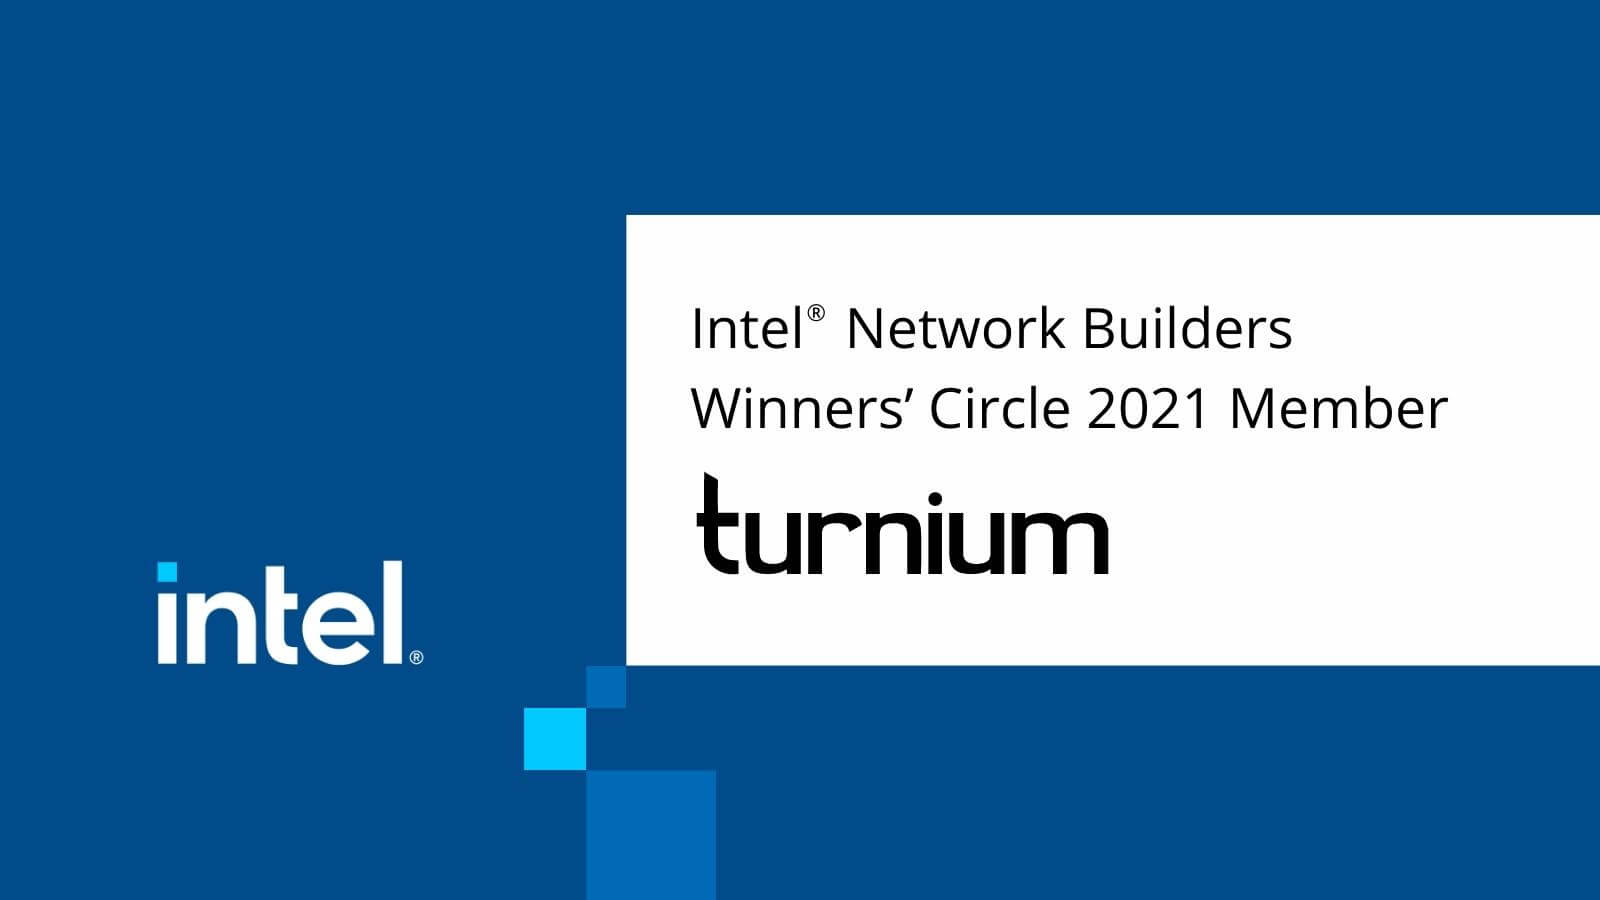 Turnium 2021 Intel Network Builders Winner Circle Member